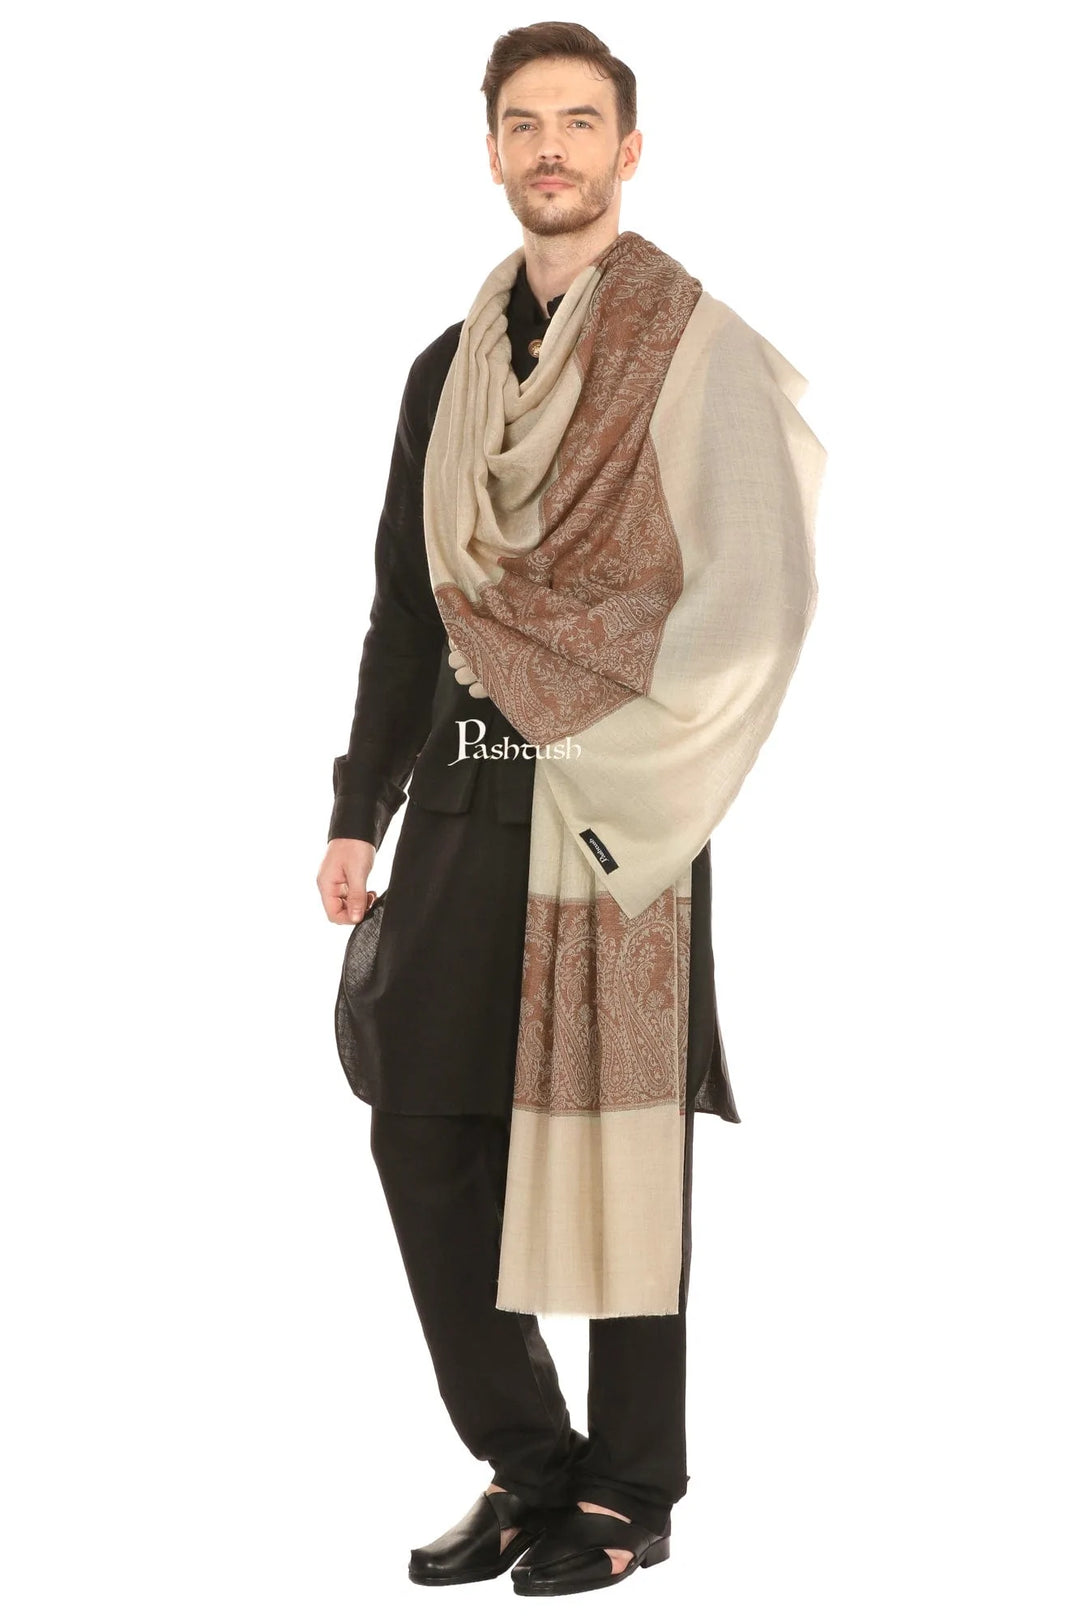 Pashtush India Mens Shawls Gents Shawl Pashtush Mens Woven Jacquard Shawl, Fine Wool, Extra Soft And Warm